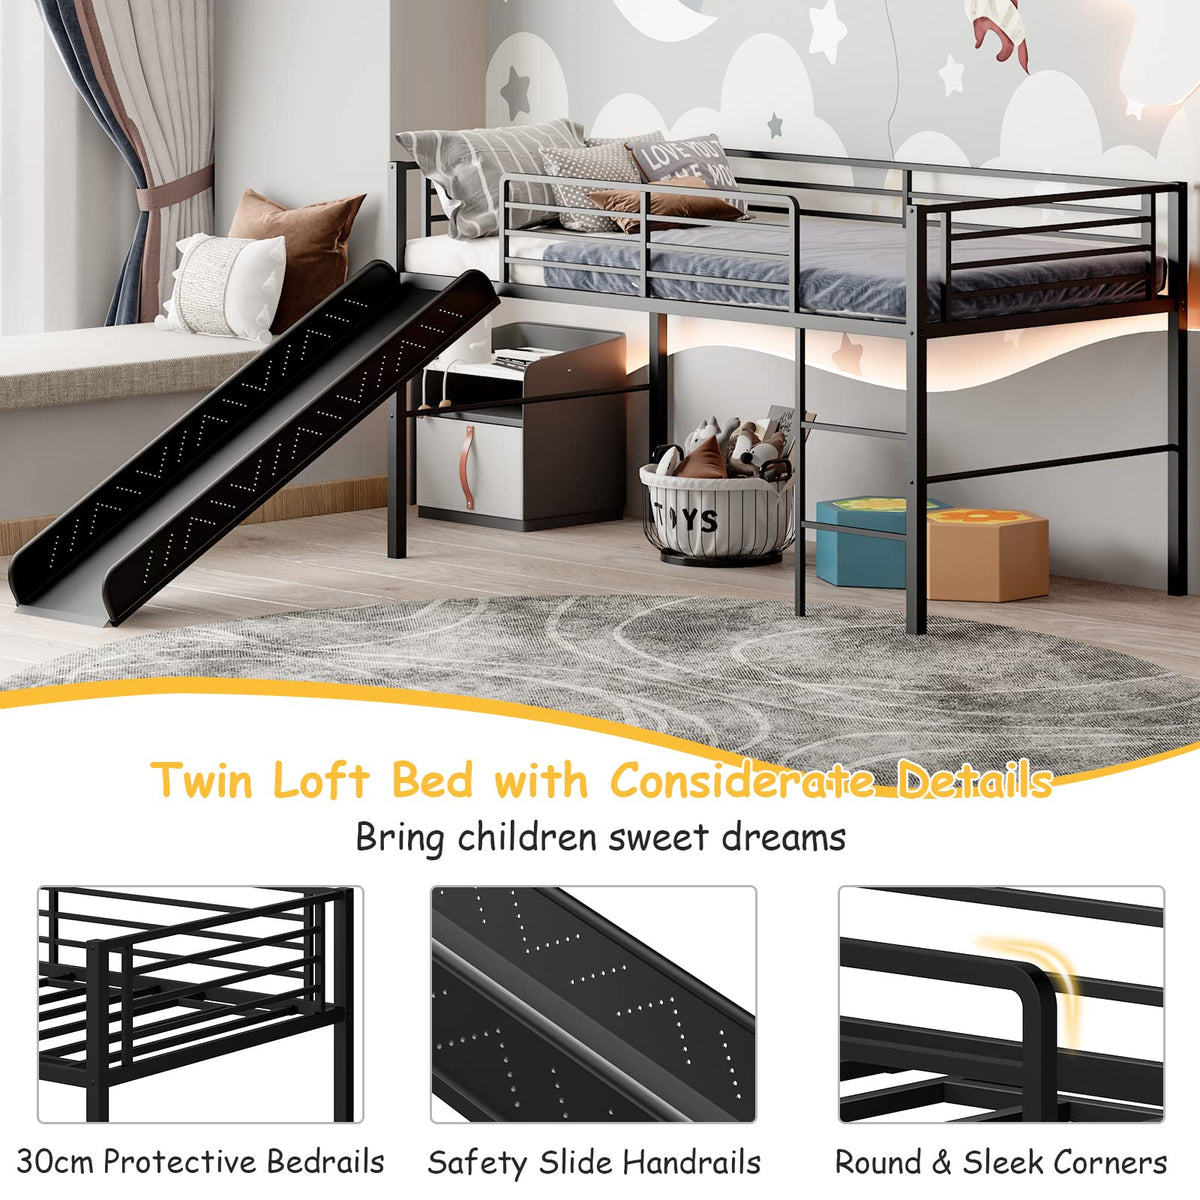 Giantex.AU - Furniture, Household Supplies, Raised Bed, Kids Toys